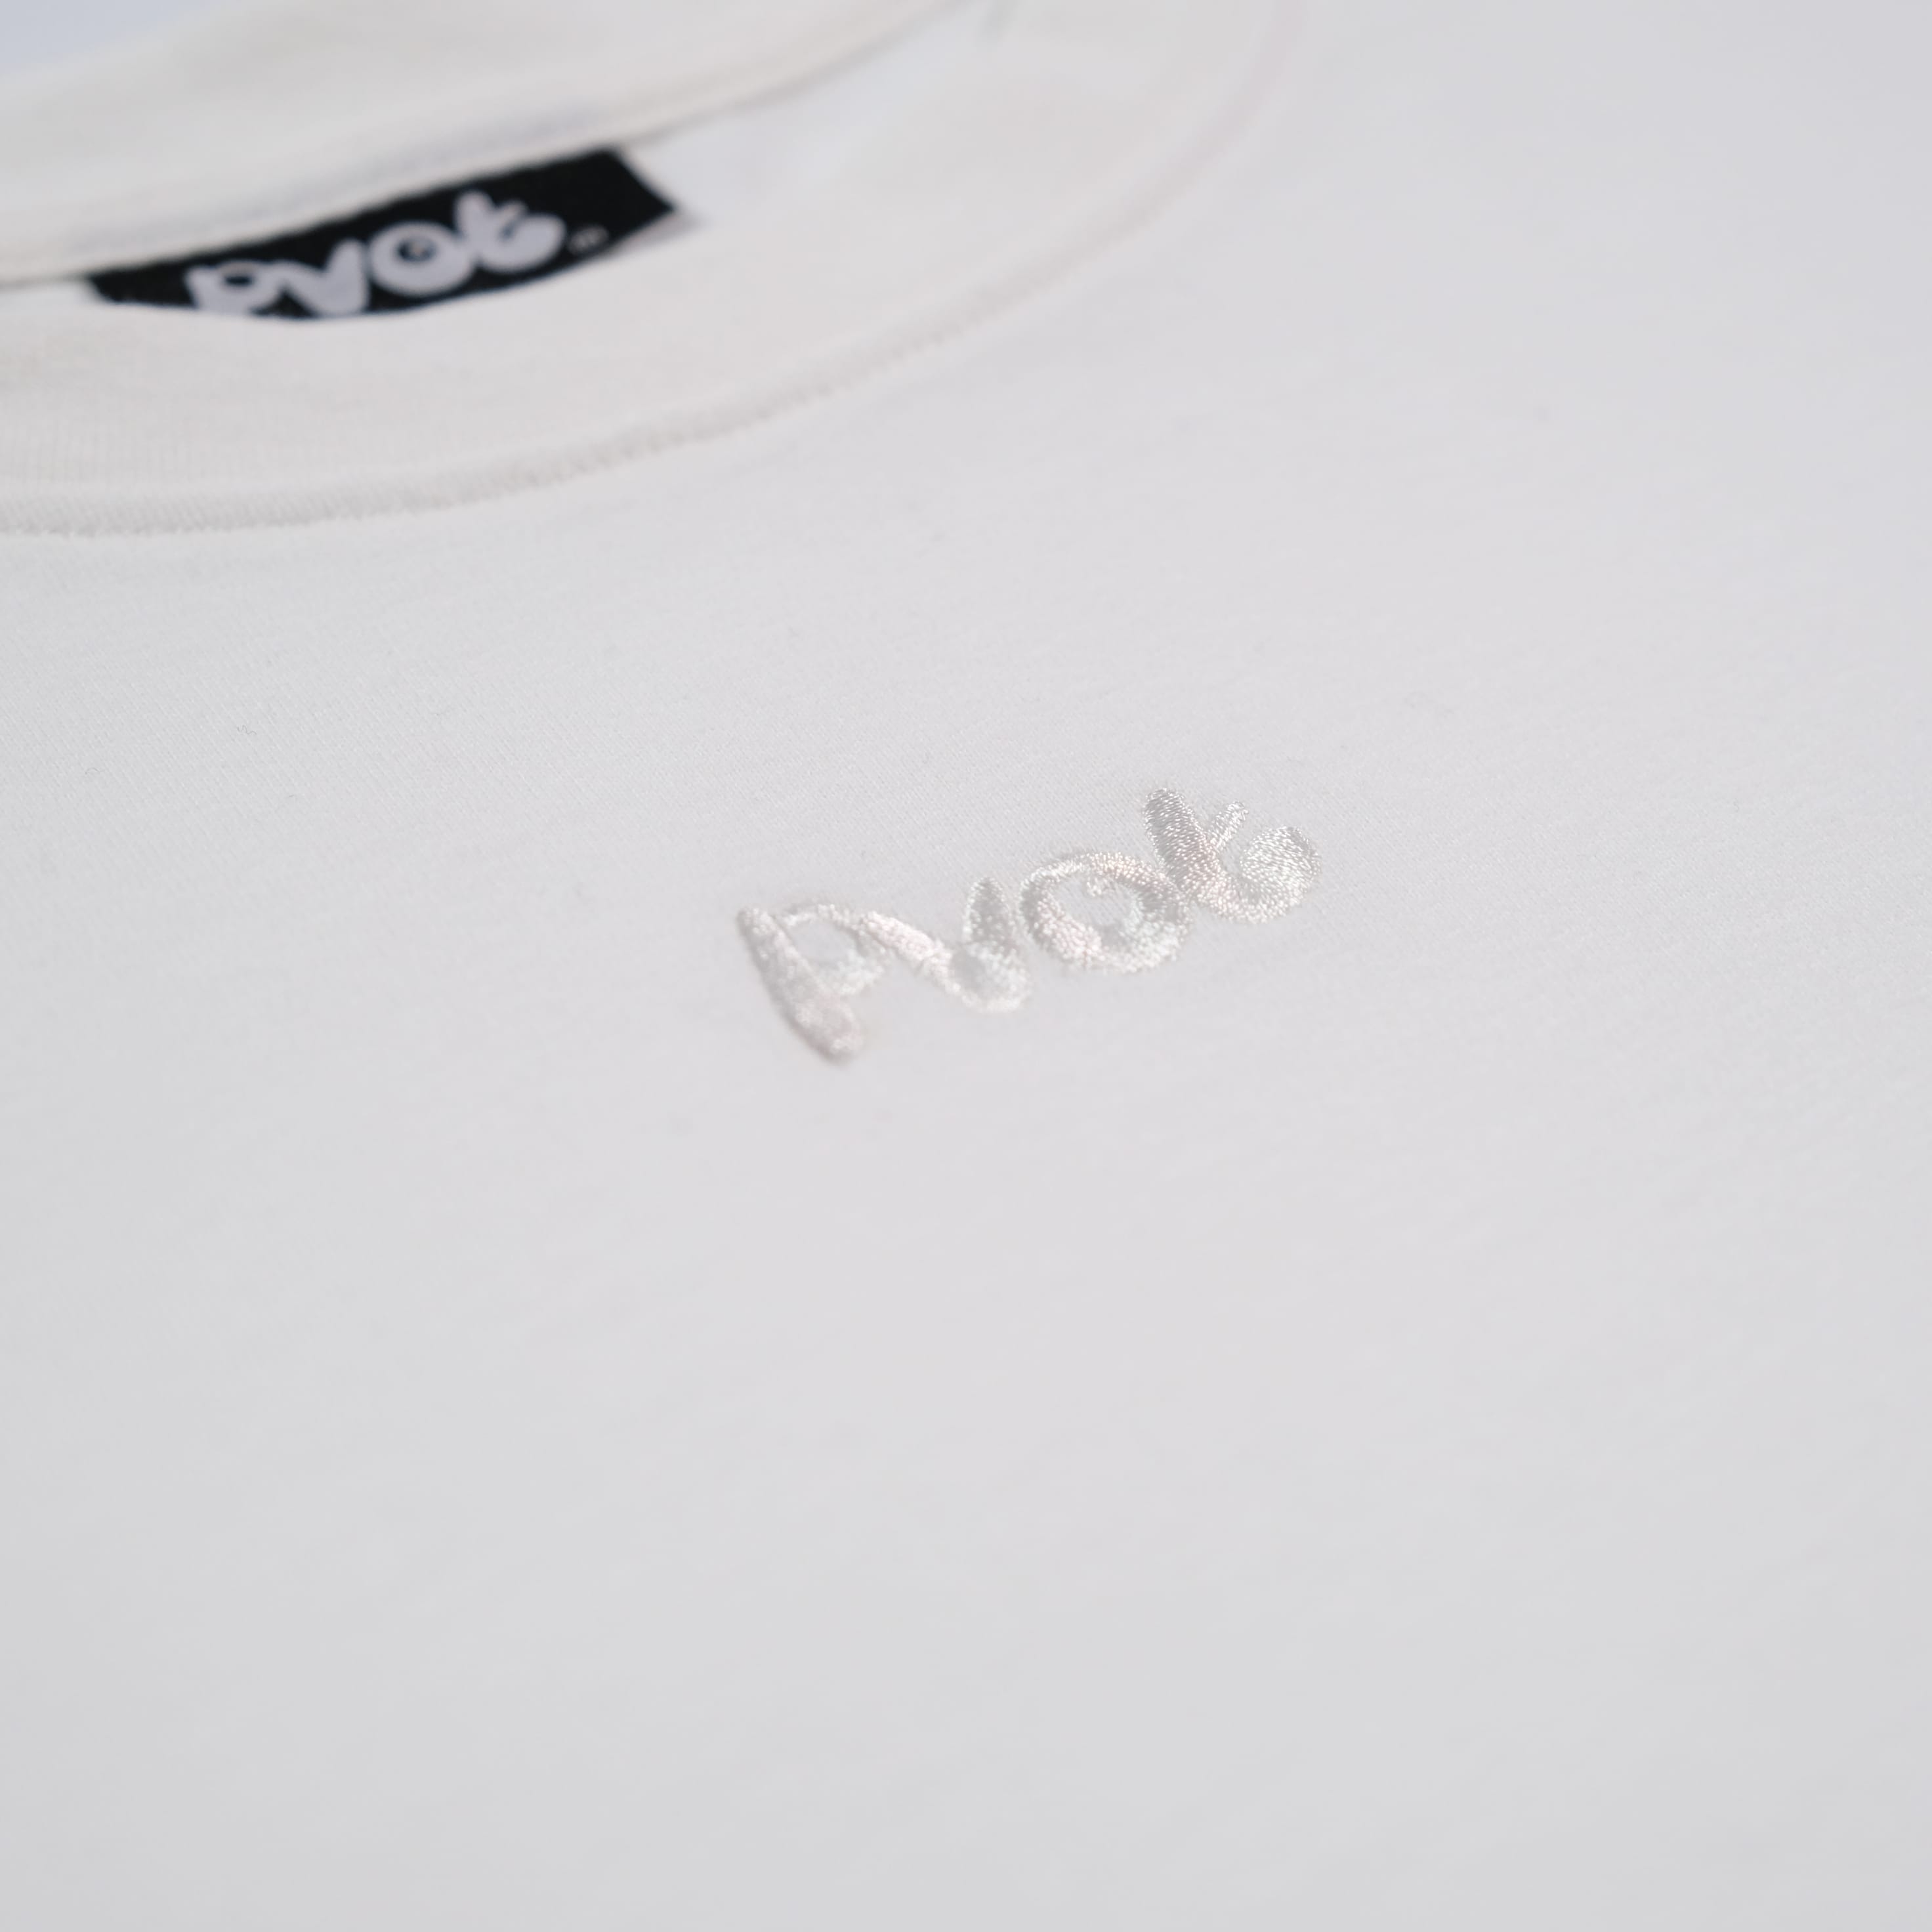 Pvot Core Classic T-shirts (White)